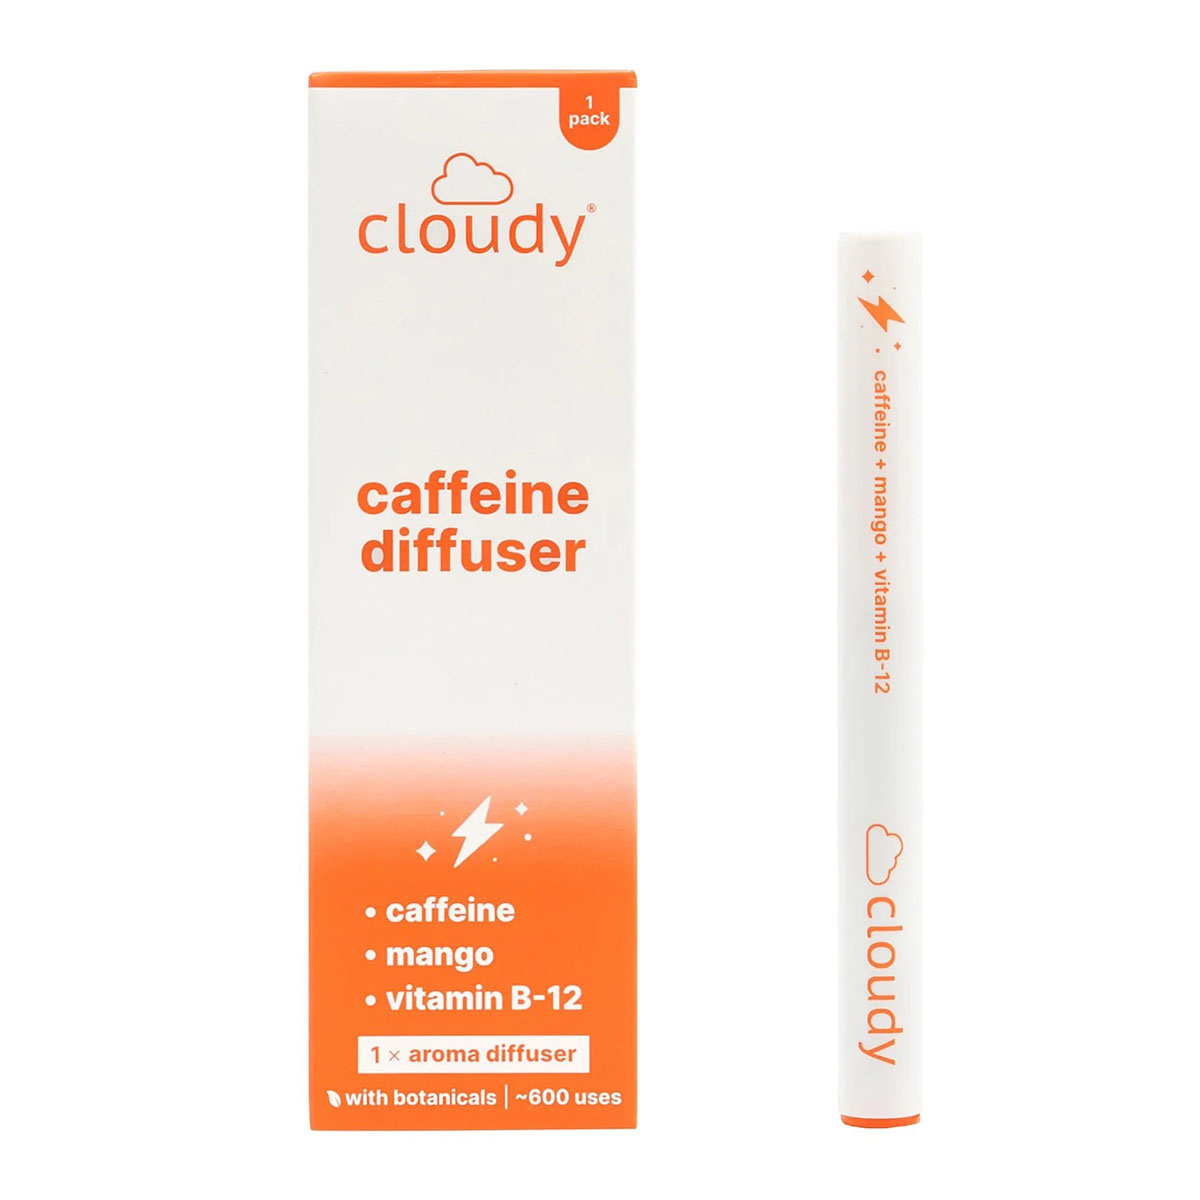 Cloudy Caffeine Diffuser